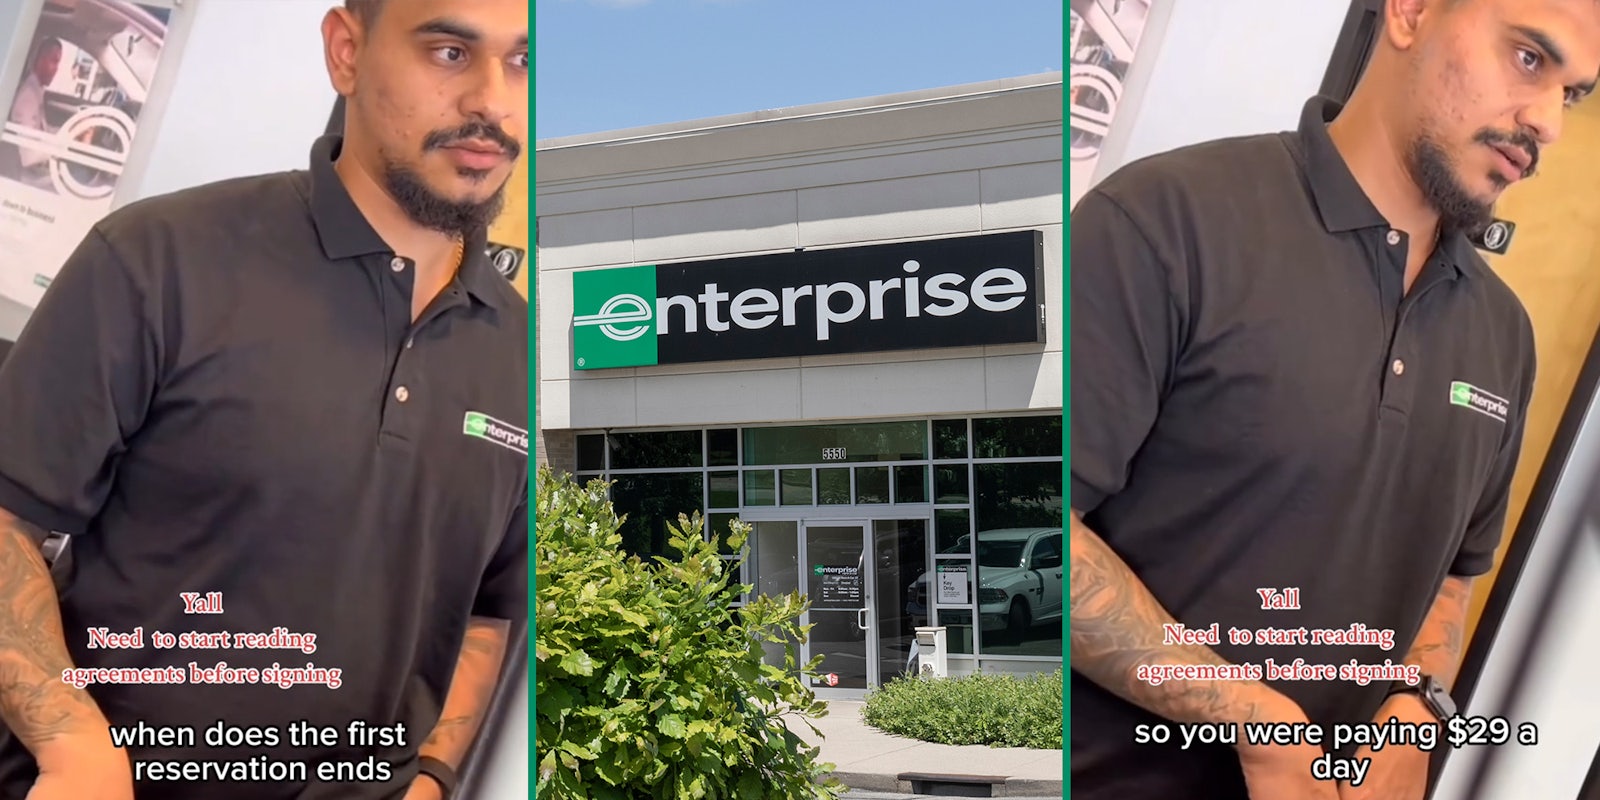 Enterprise customer confronts worker after rental came up to $30 more